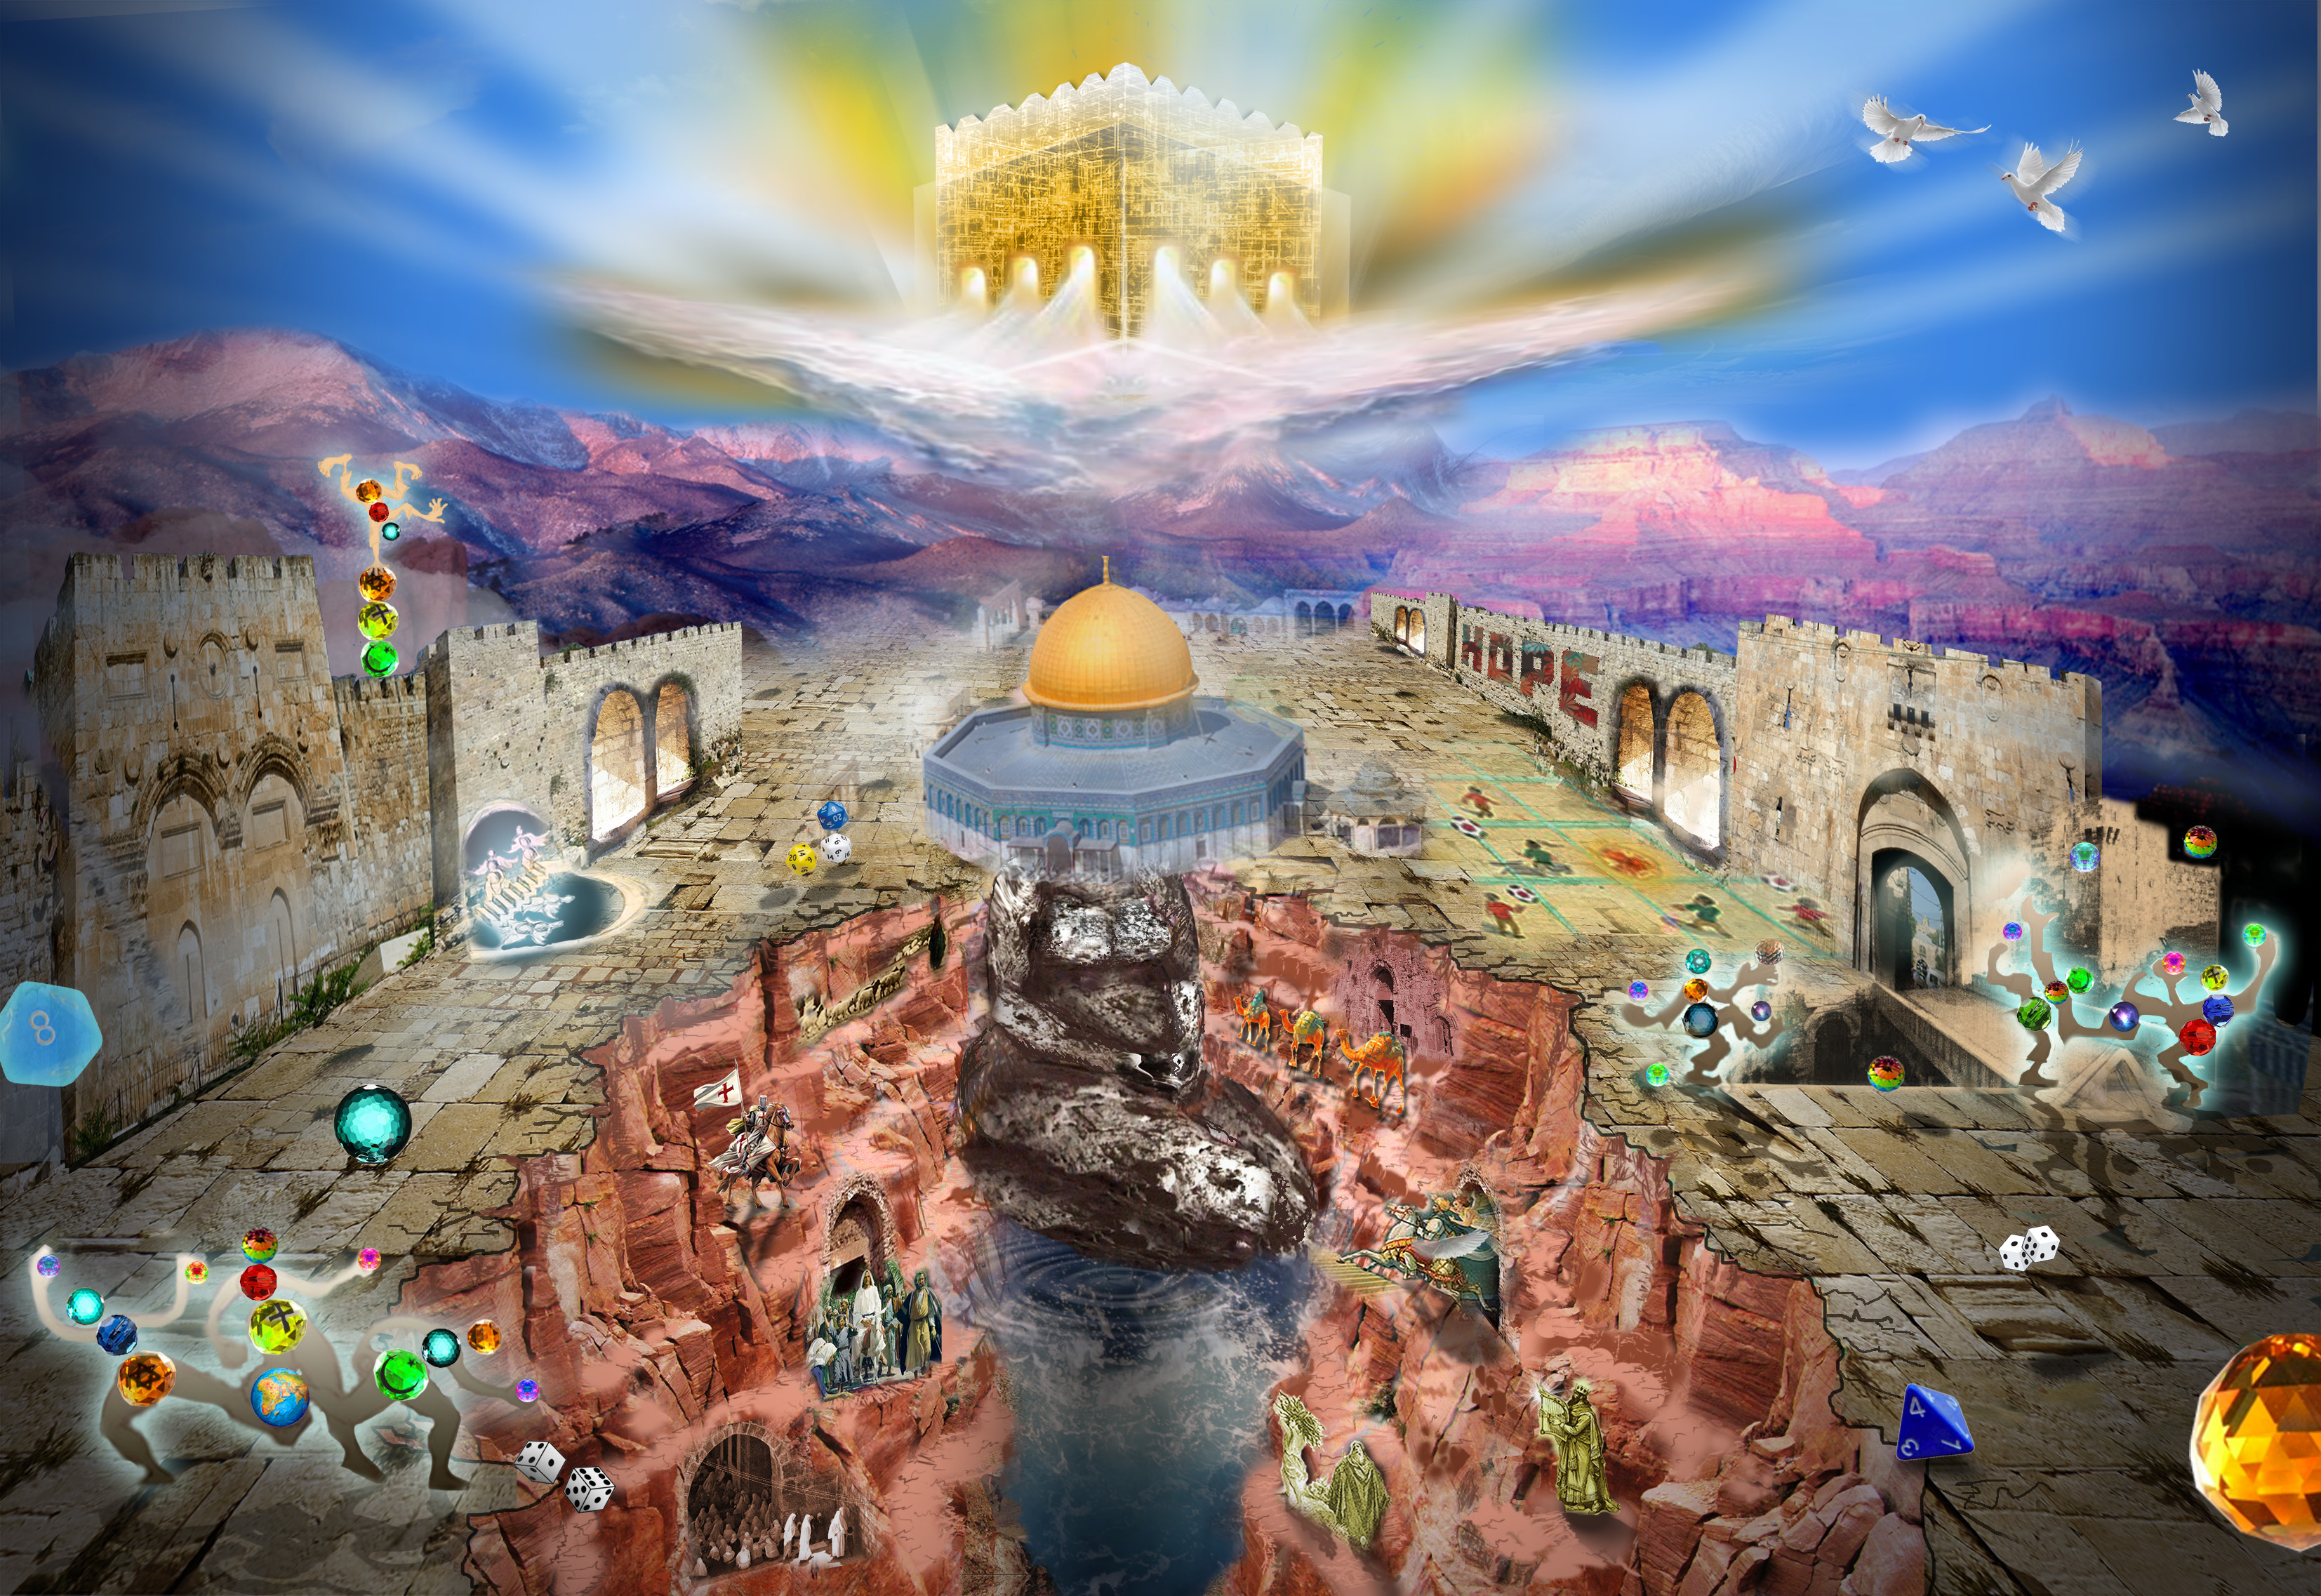  NEW JERUSALEM         REVELATION 